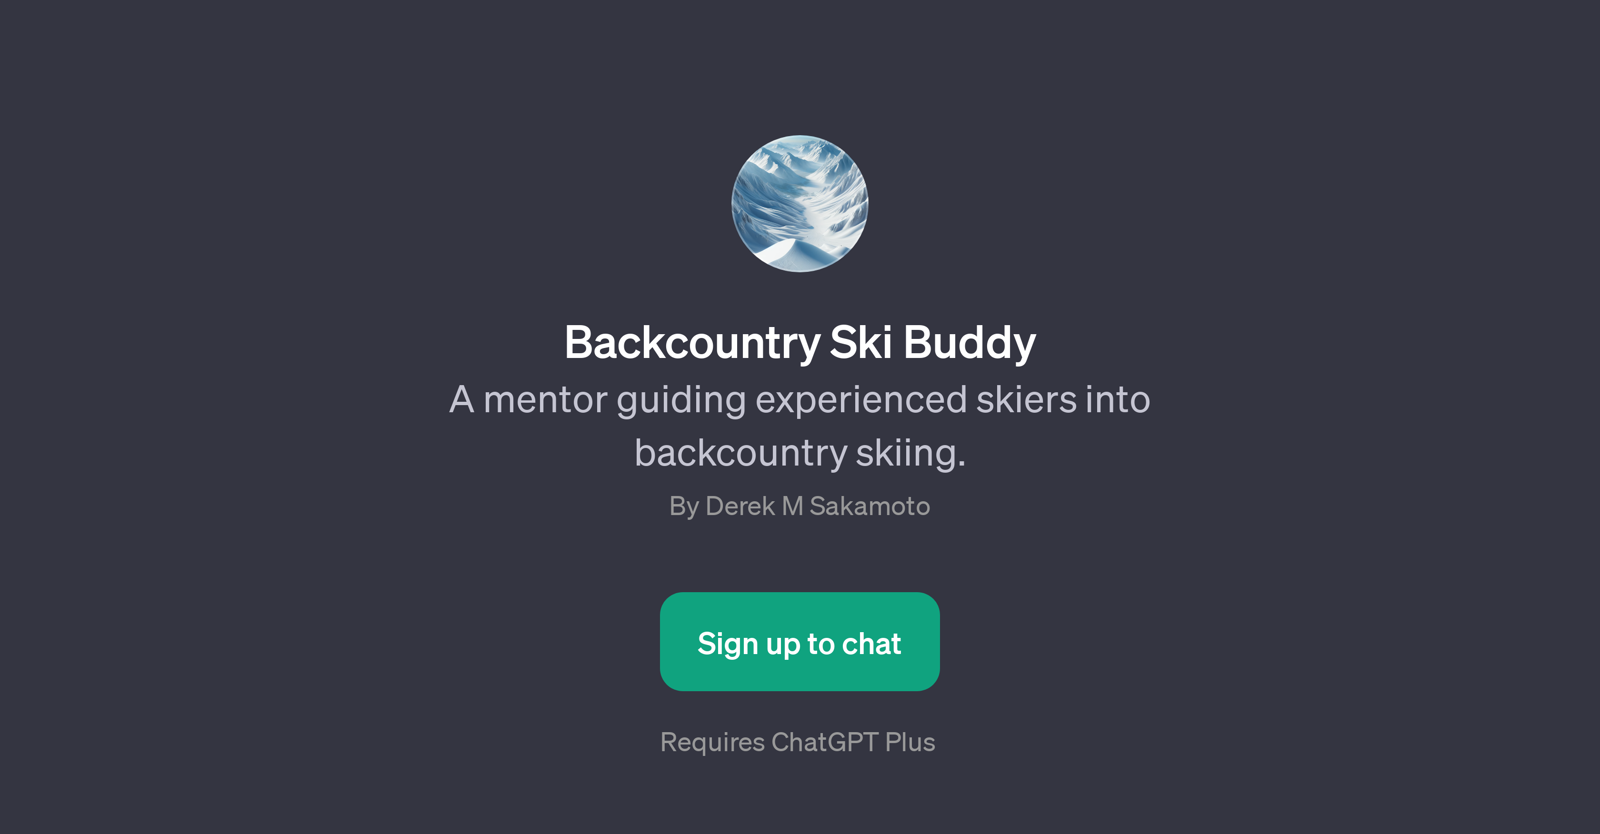 Backcountry Ski Buddy website